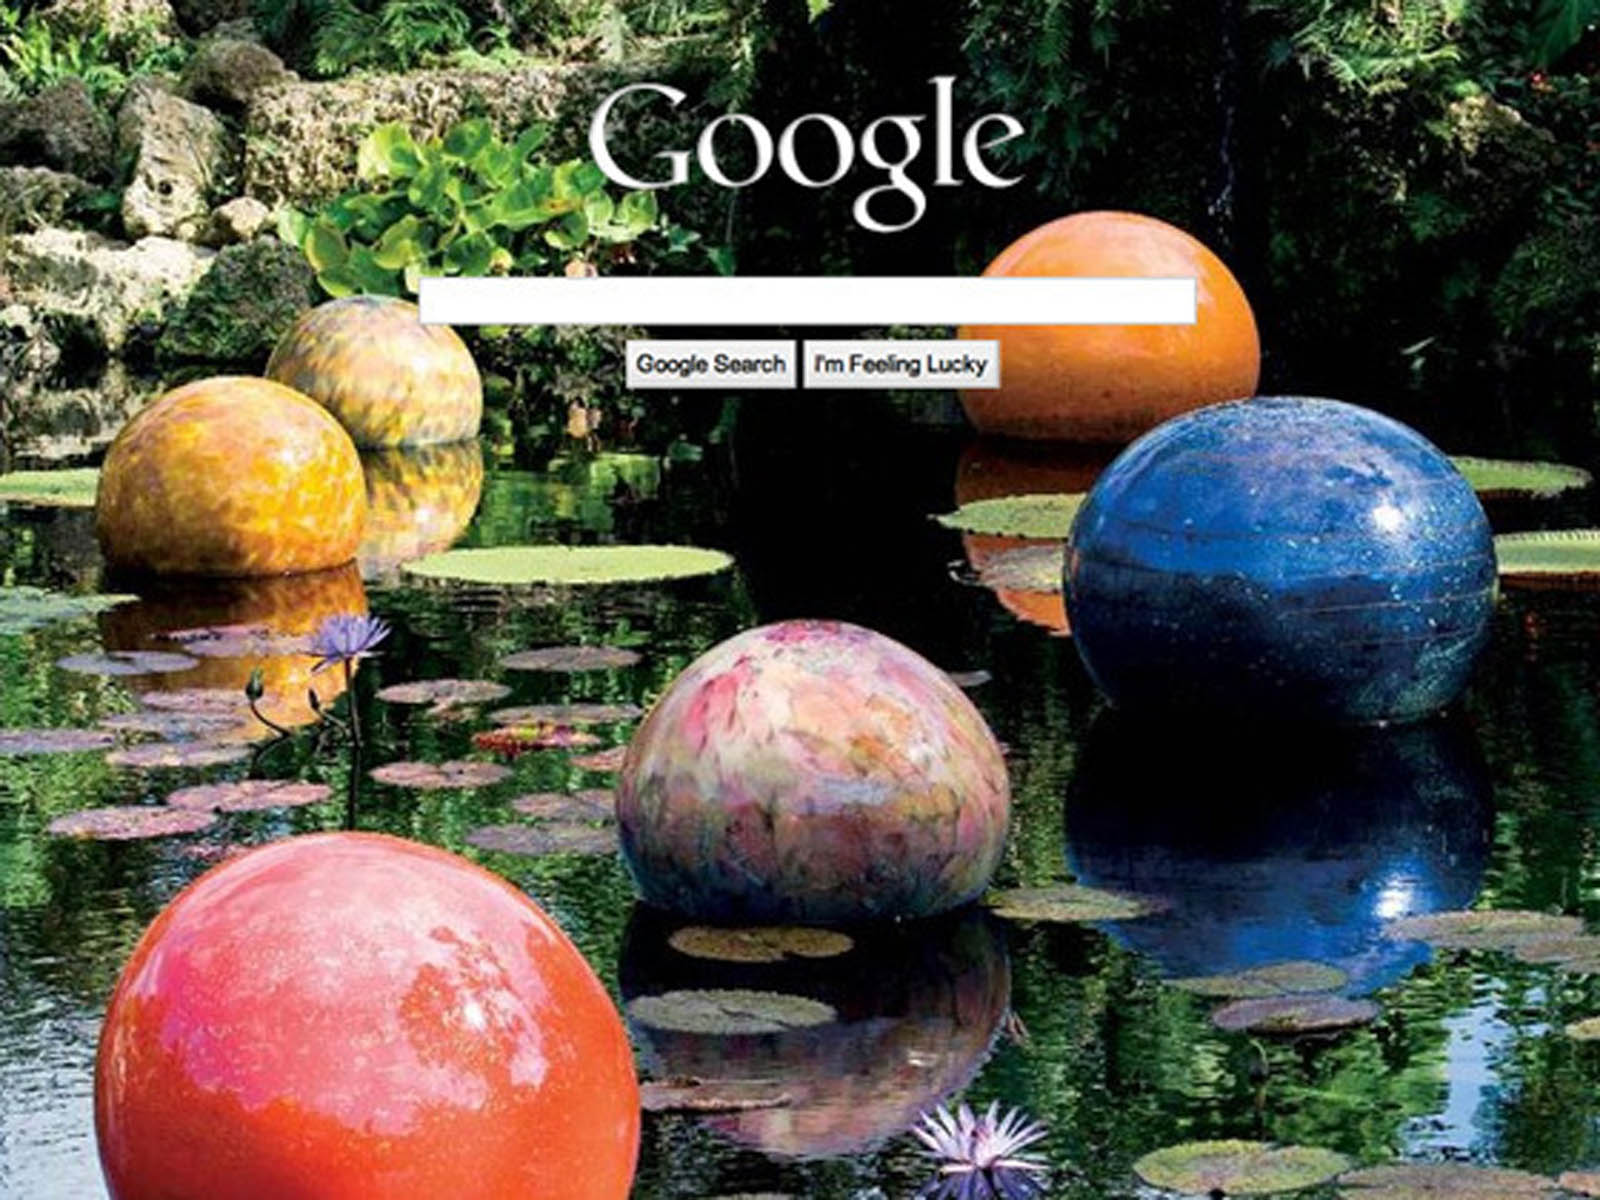  Google Desktop Wallpapers Google Desktop Backgrounds Images